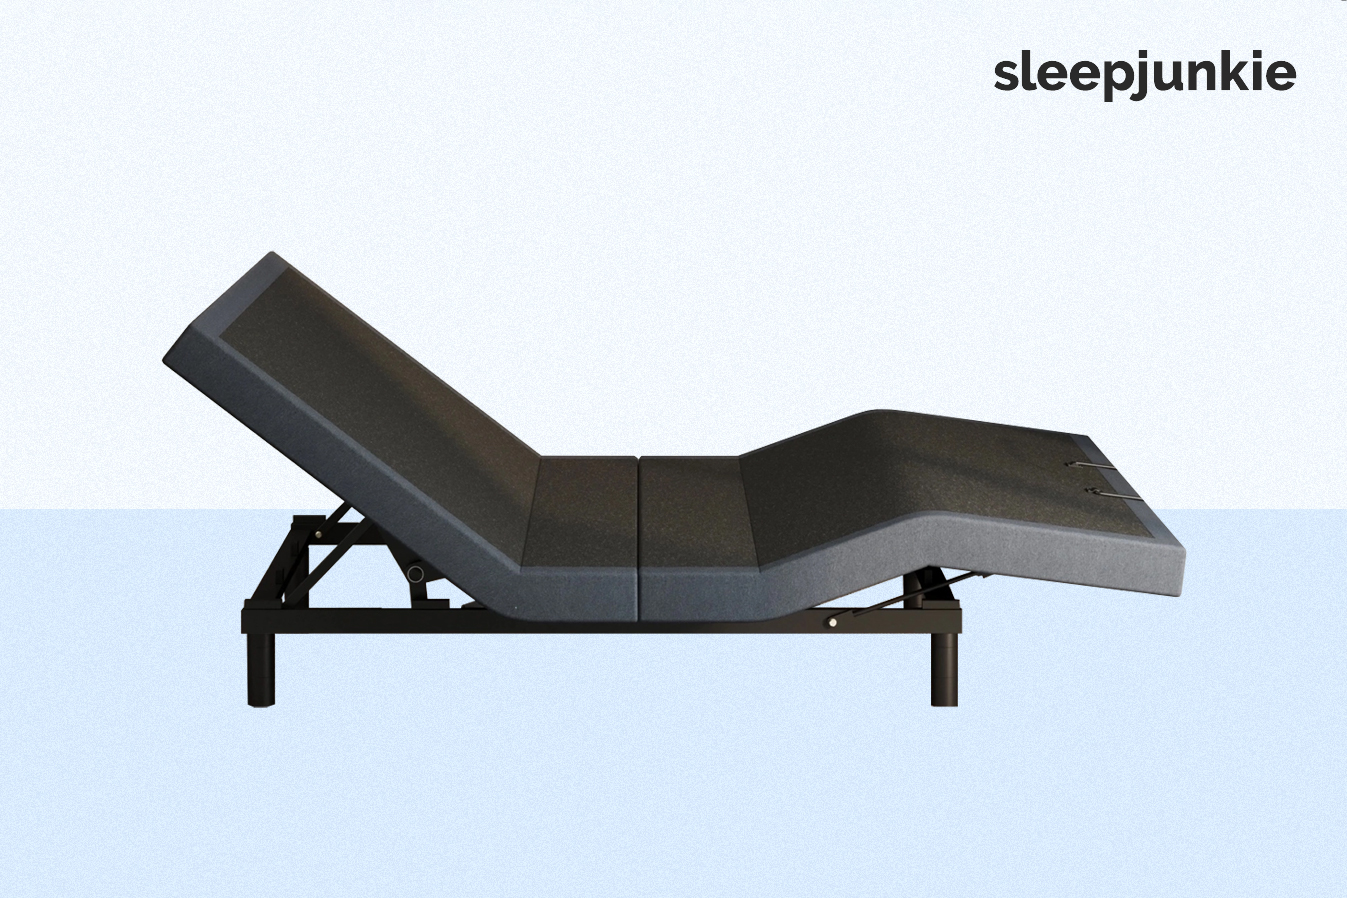 amerisleep is one of the top adjustable bed brands